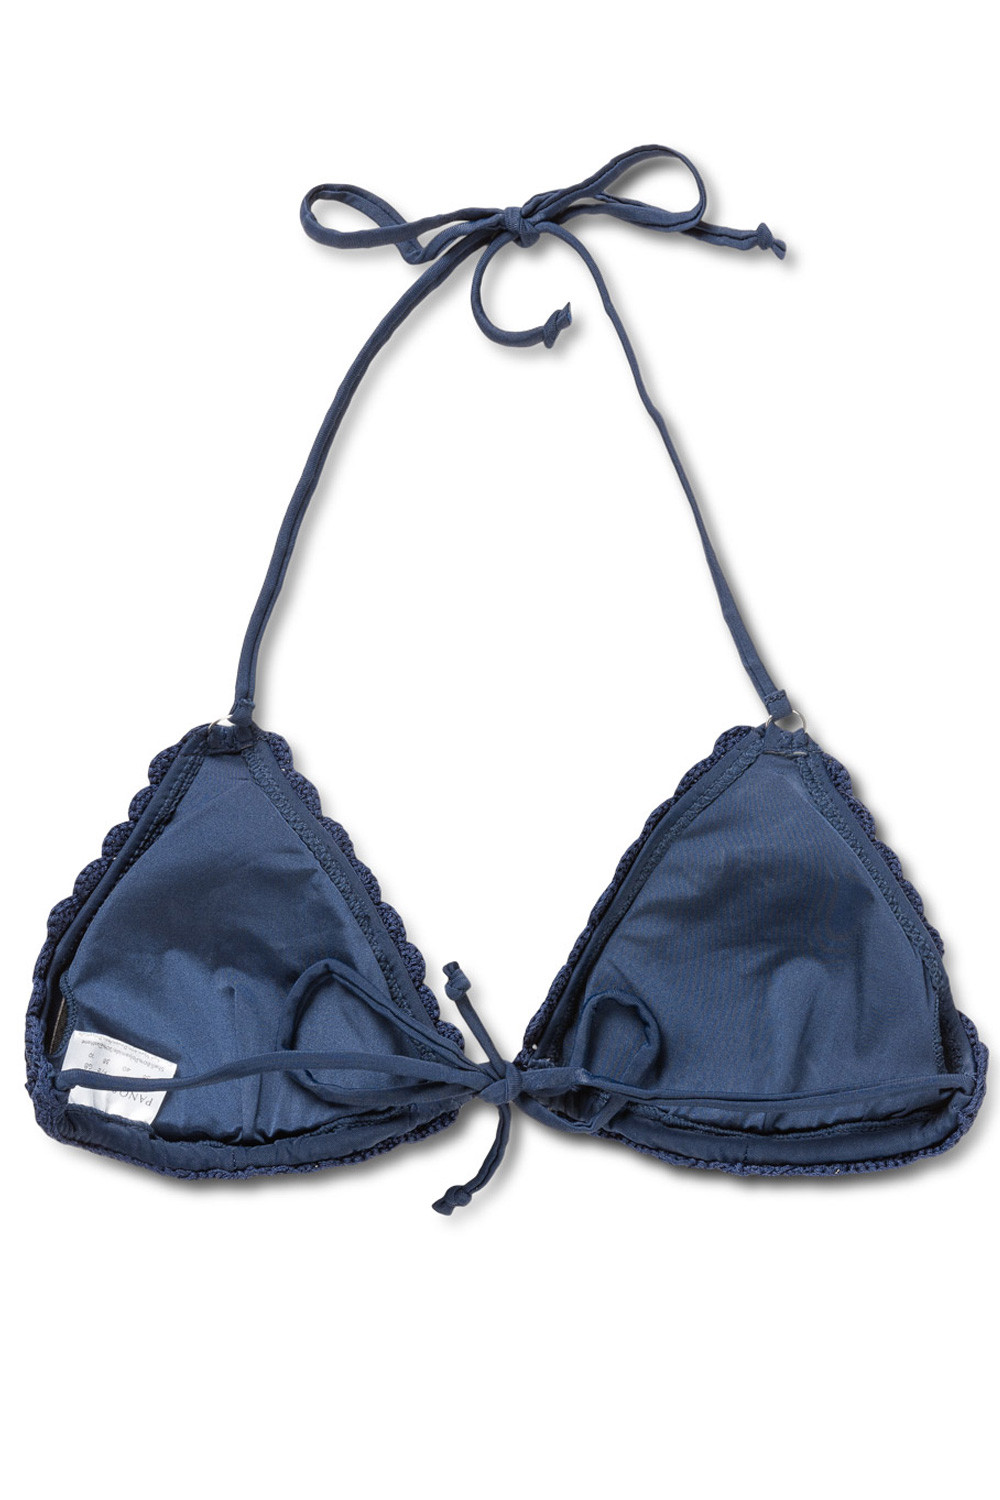 Panos Emporio Kandia Crochet Bikini Top Navy Blue